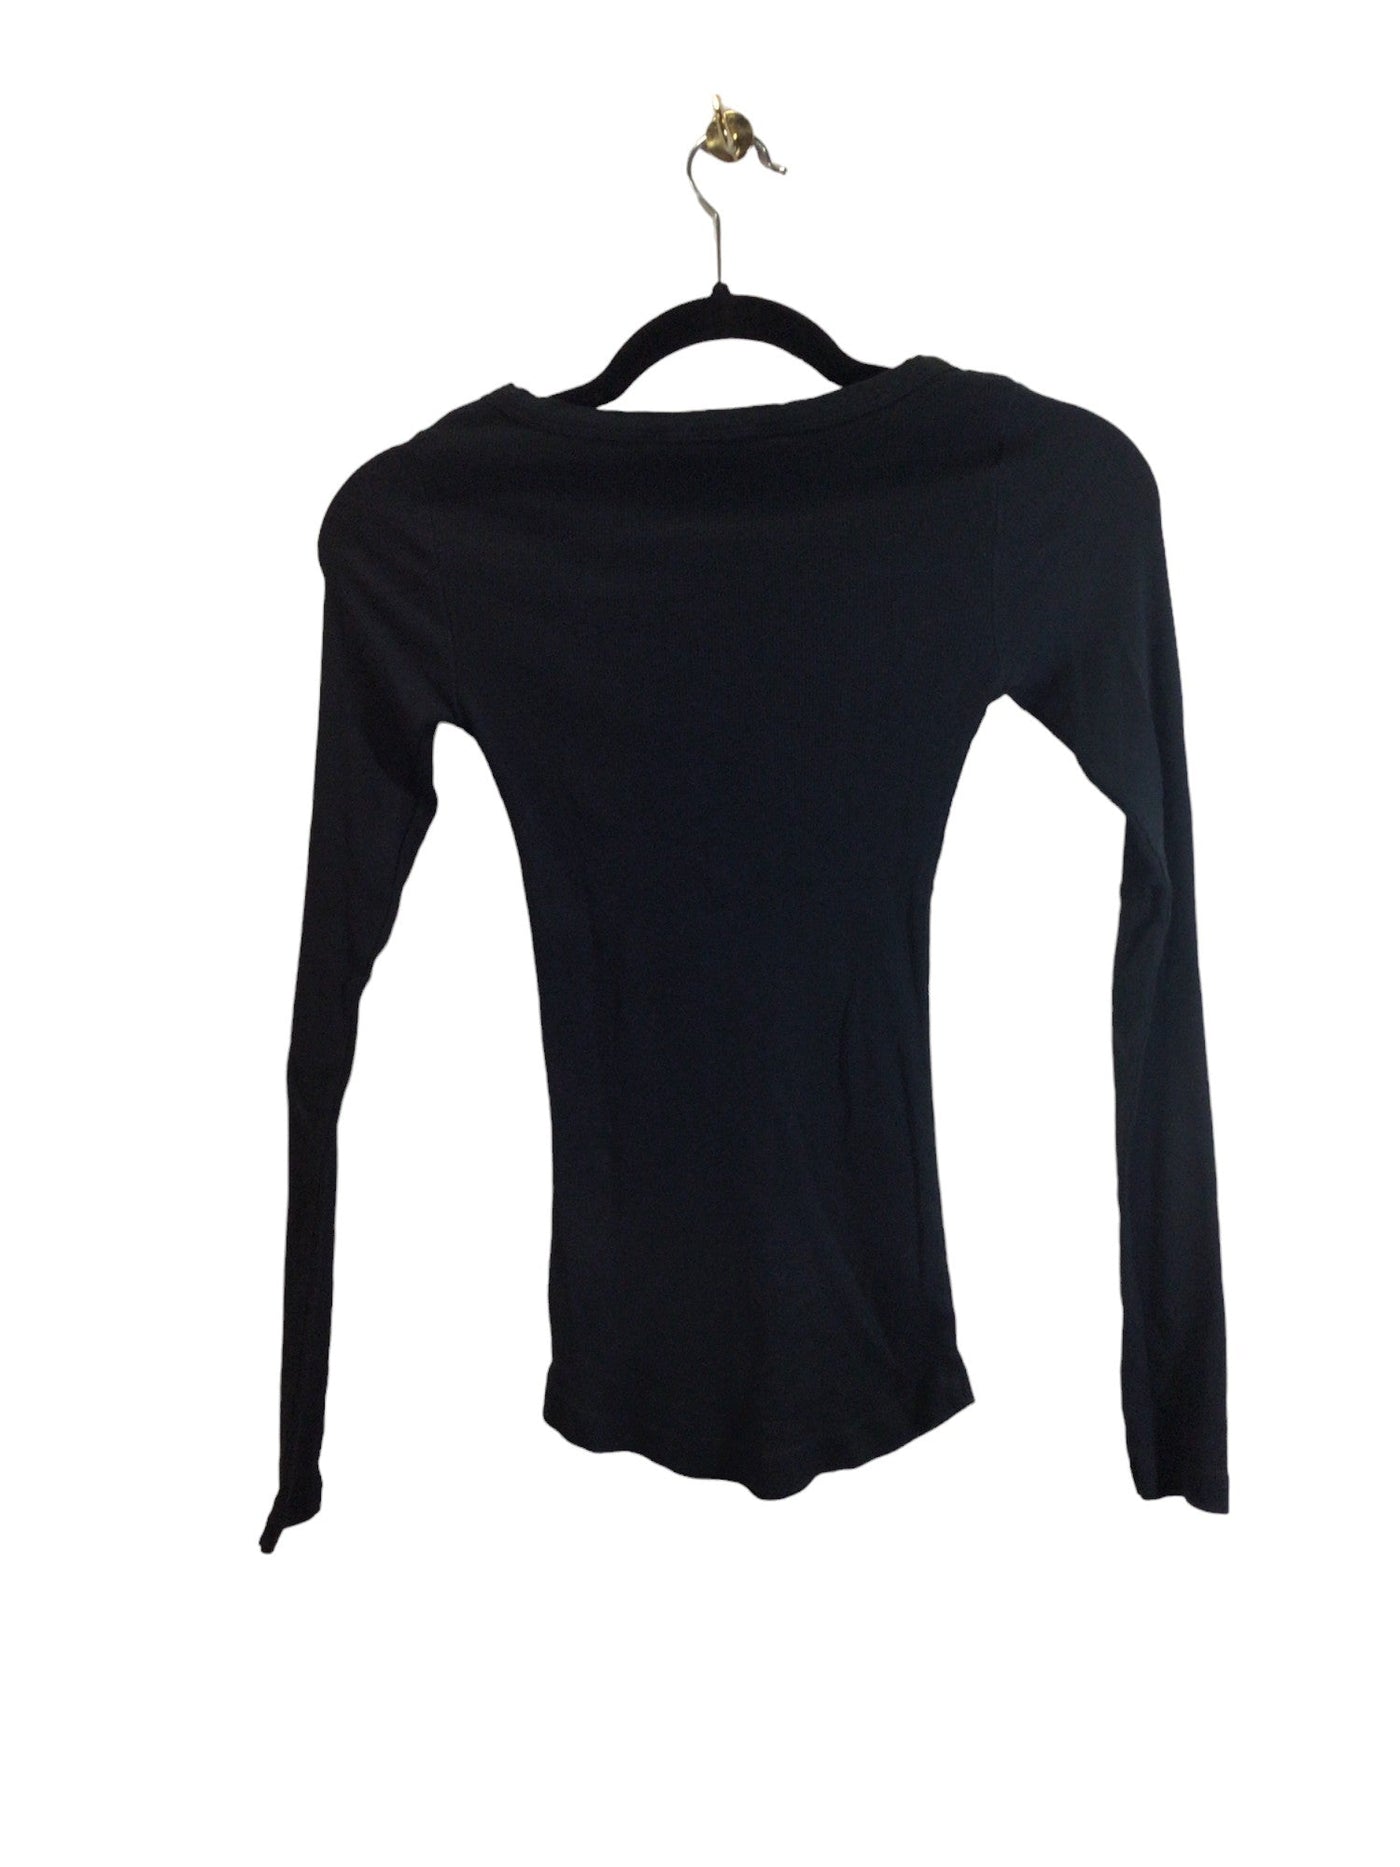 H&M Women T-Shirts Regular fit in Black - Size XS | 9.99 $ KOOP